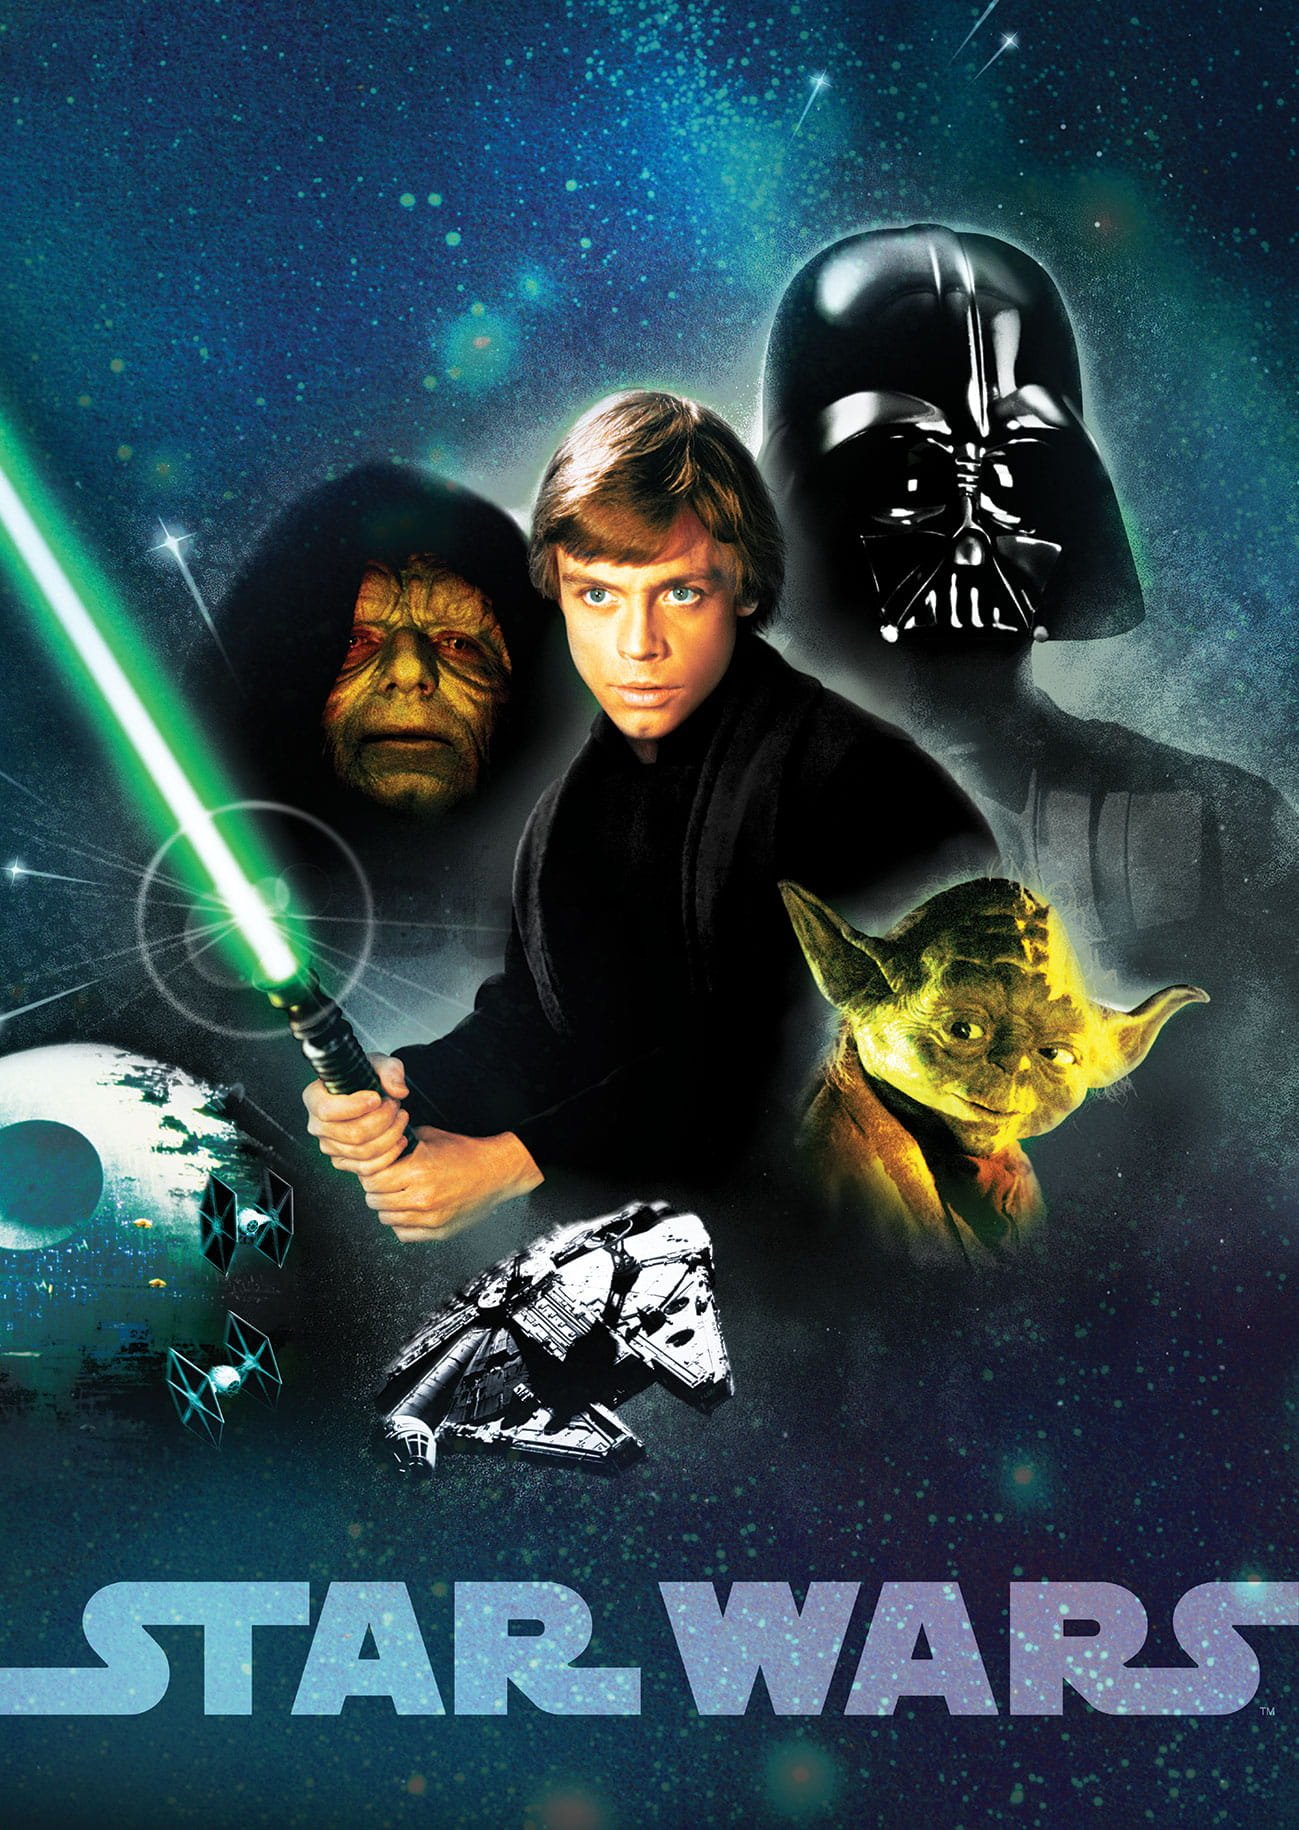 Slika na platnu: Star Wars Return of the Jedi - 50x70 cm